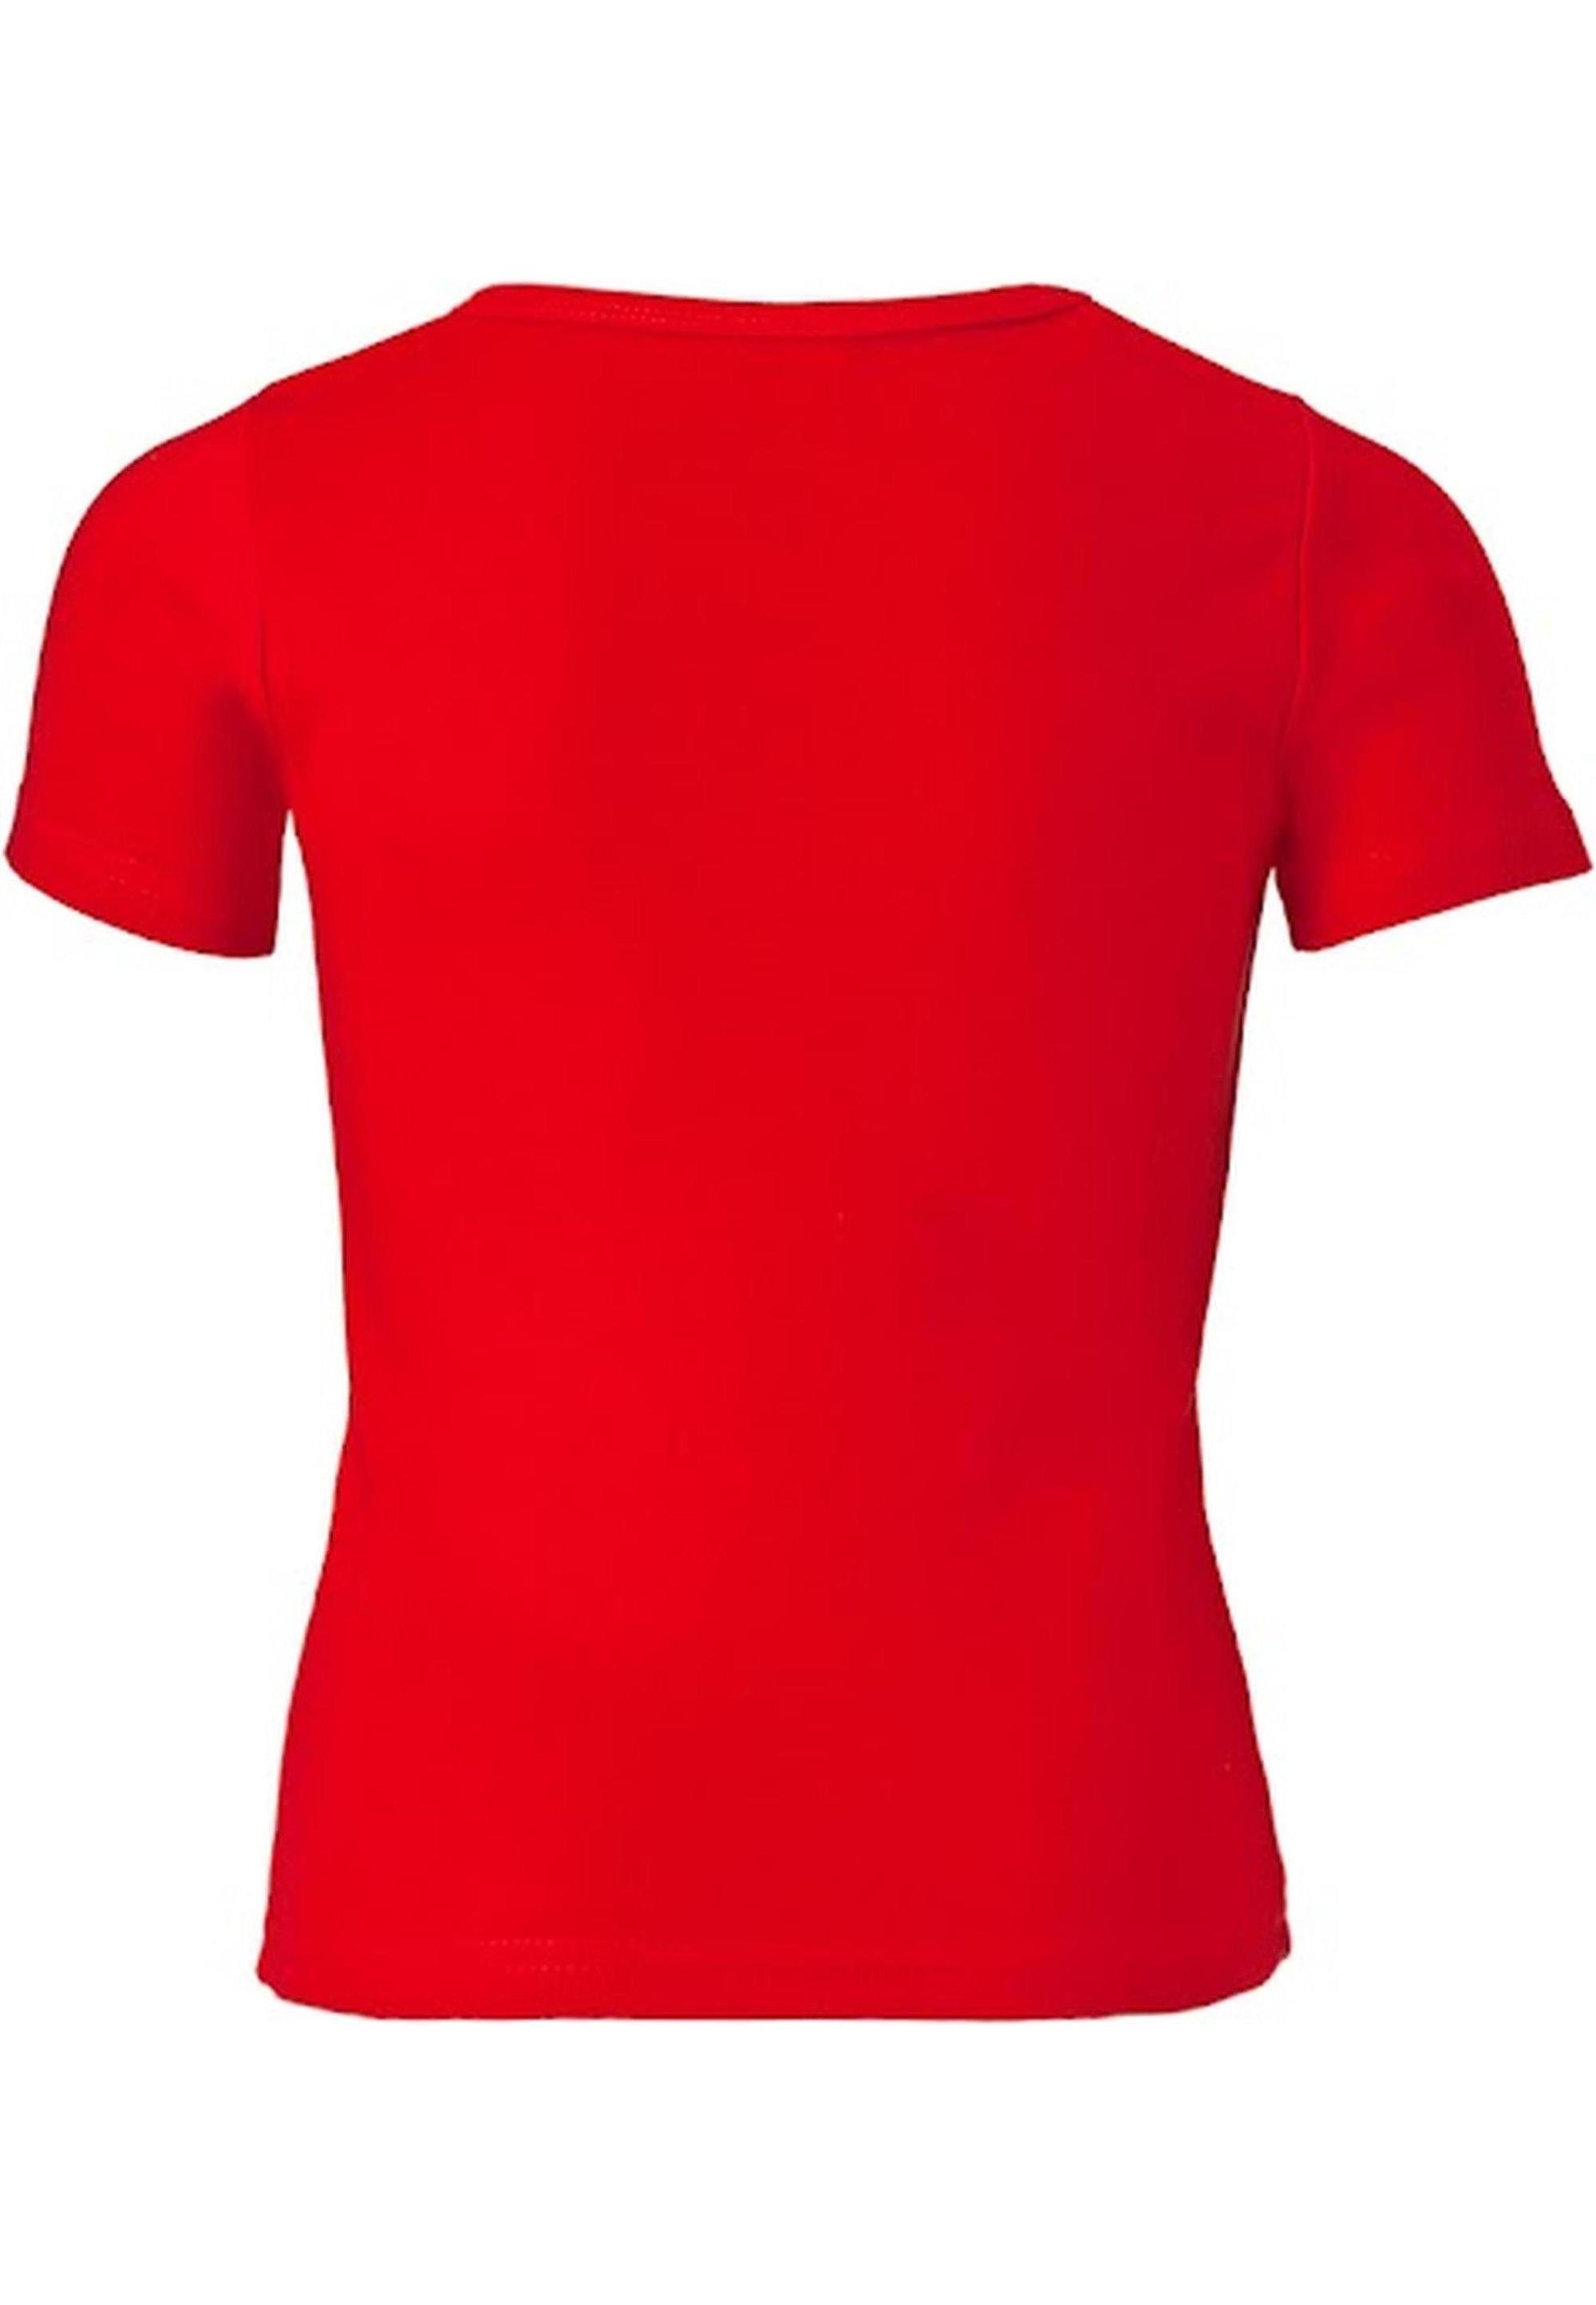 Originaldesign lizenziertem LOGOSHIRT Maus rot T-Shirt Die mit